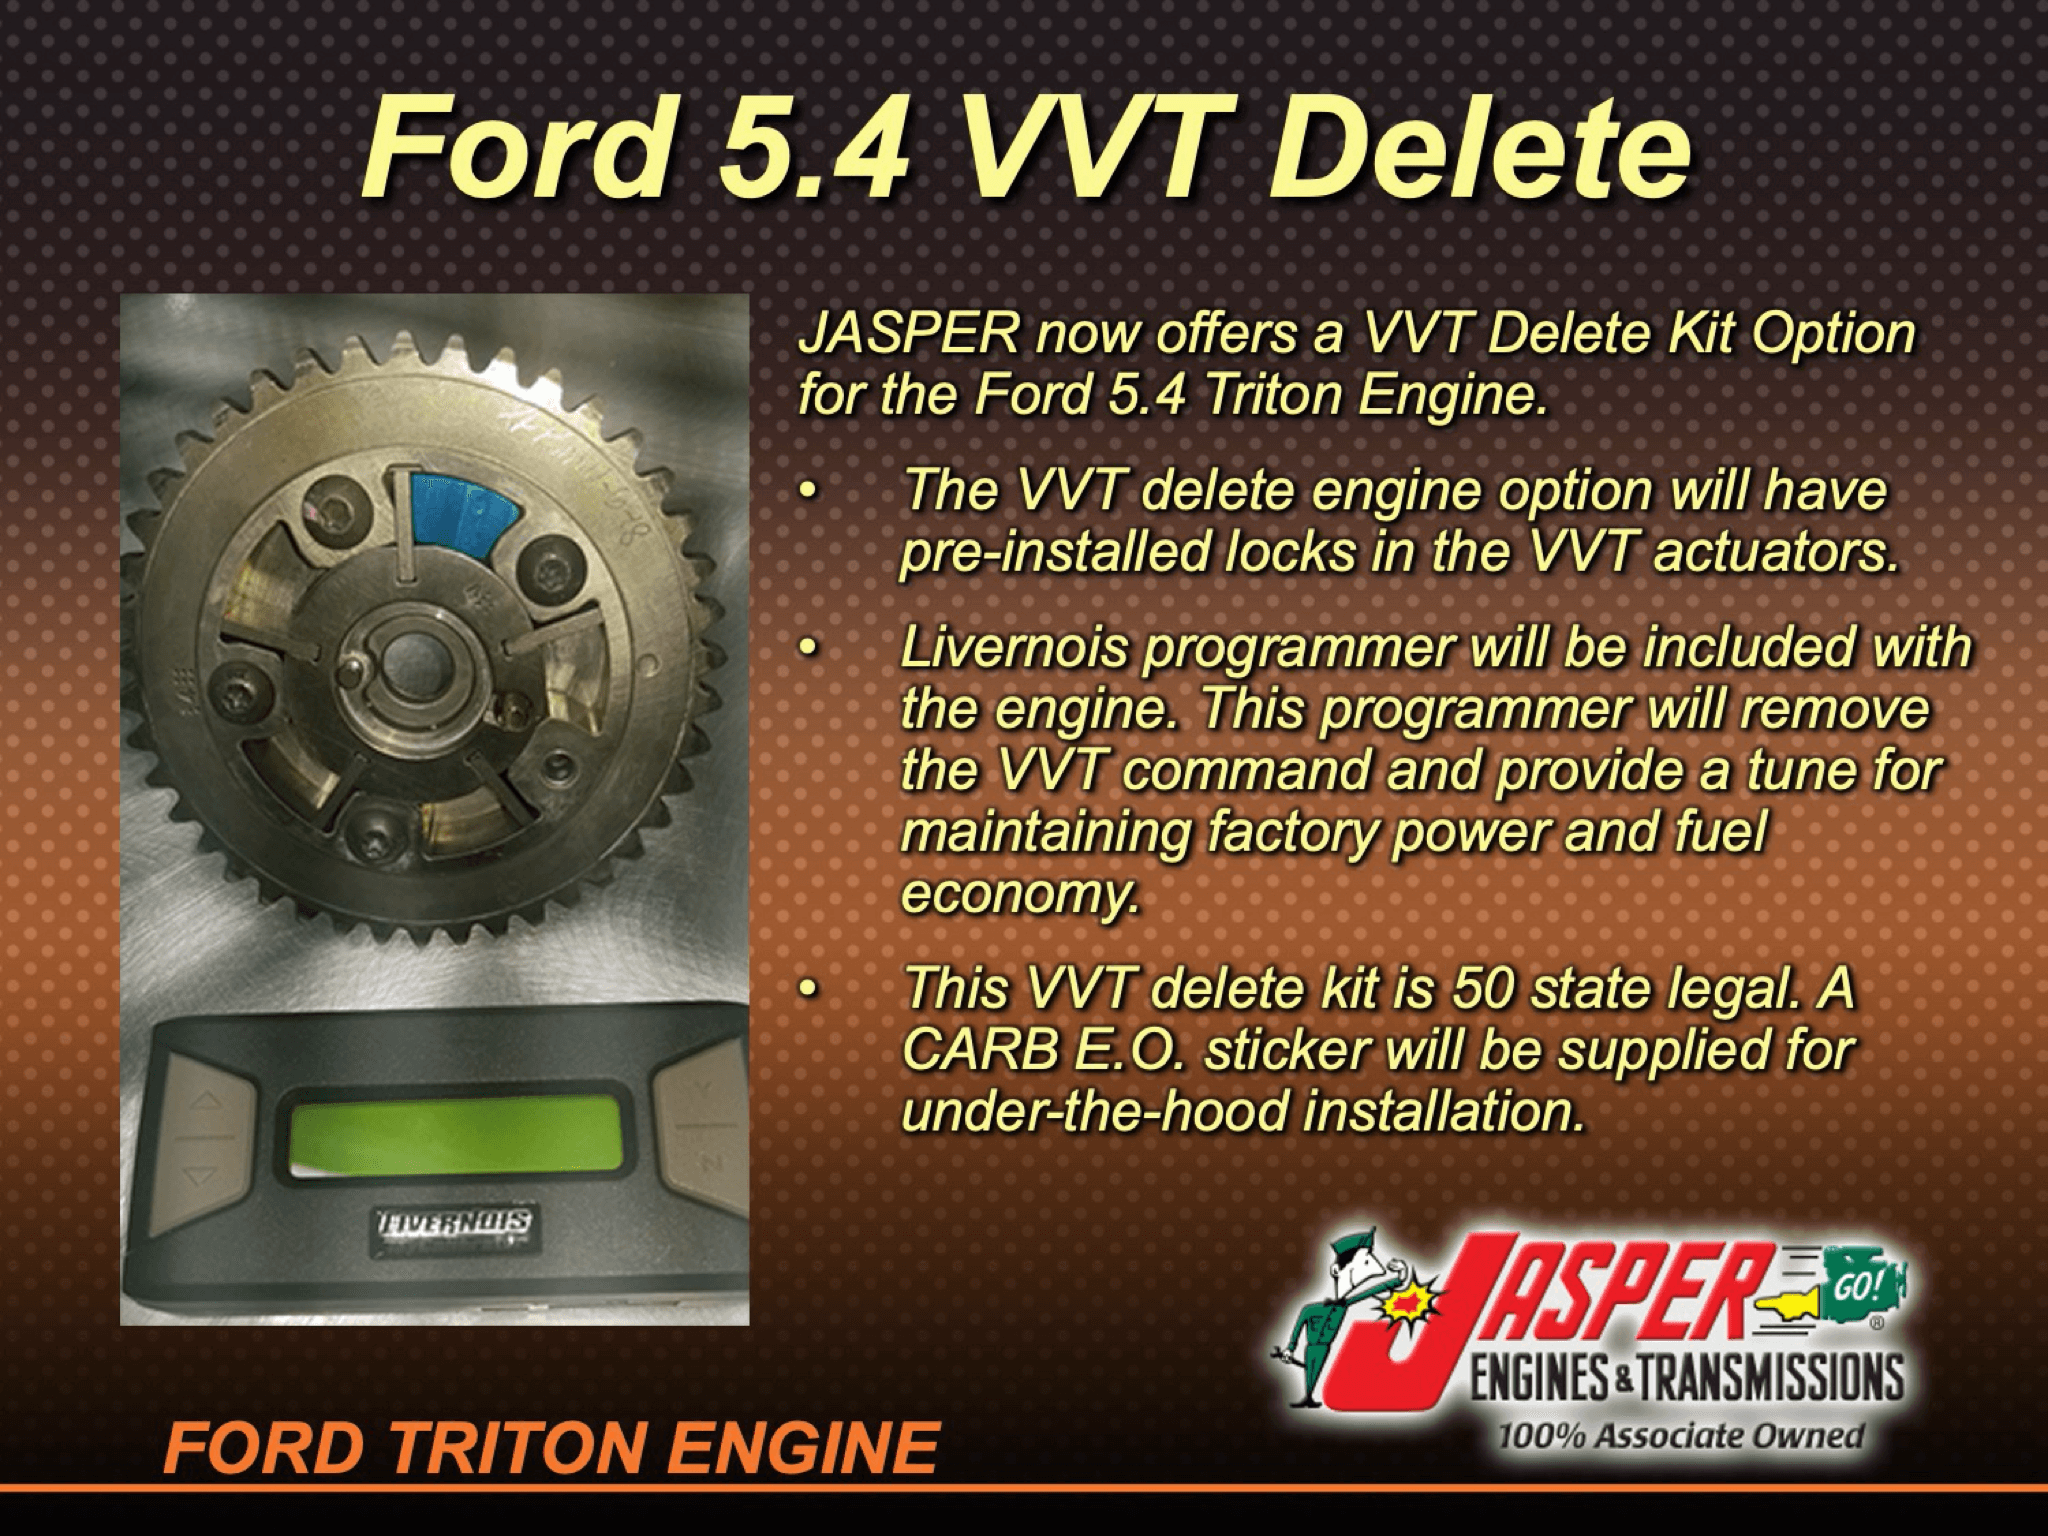 Ford Triton Engines